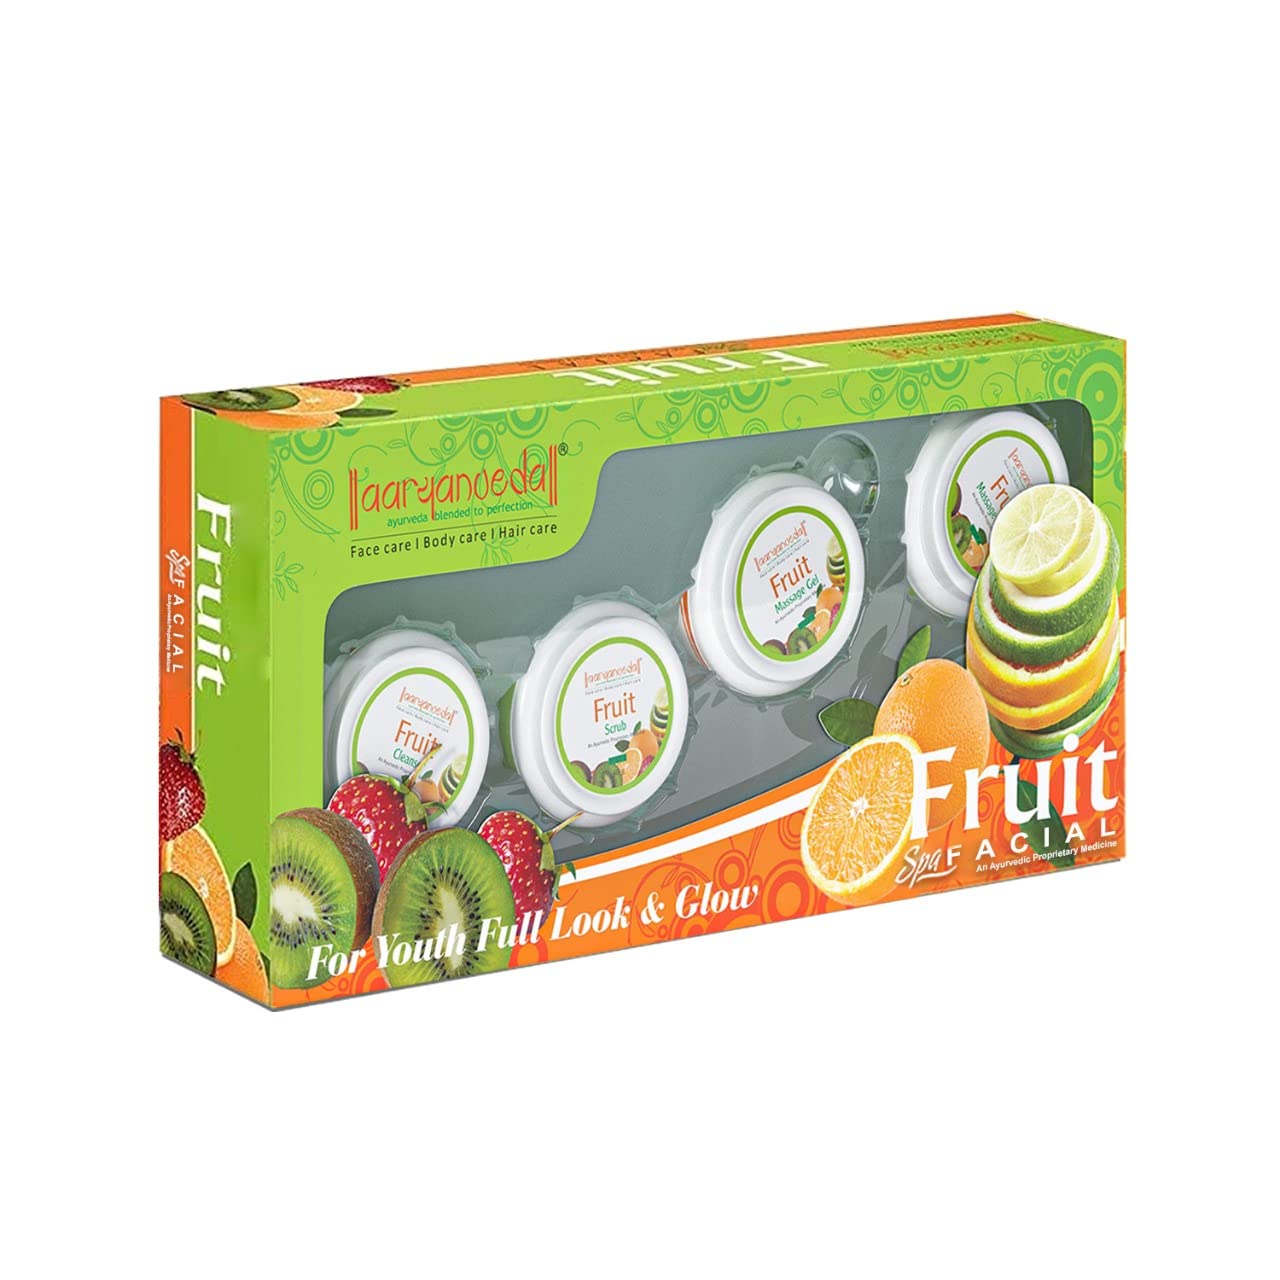 Aryanveda Fruit Facial Kit for Glowing Skin